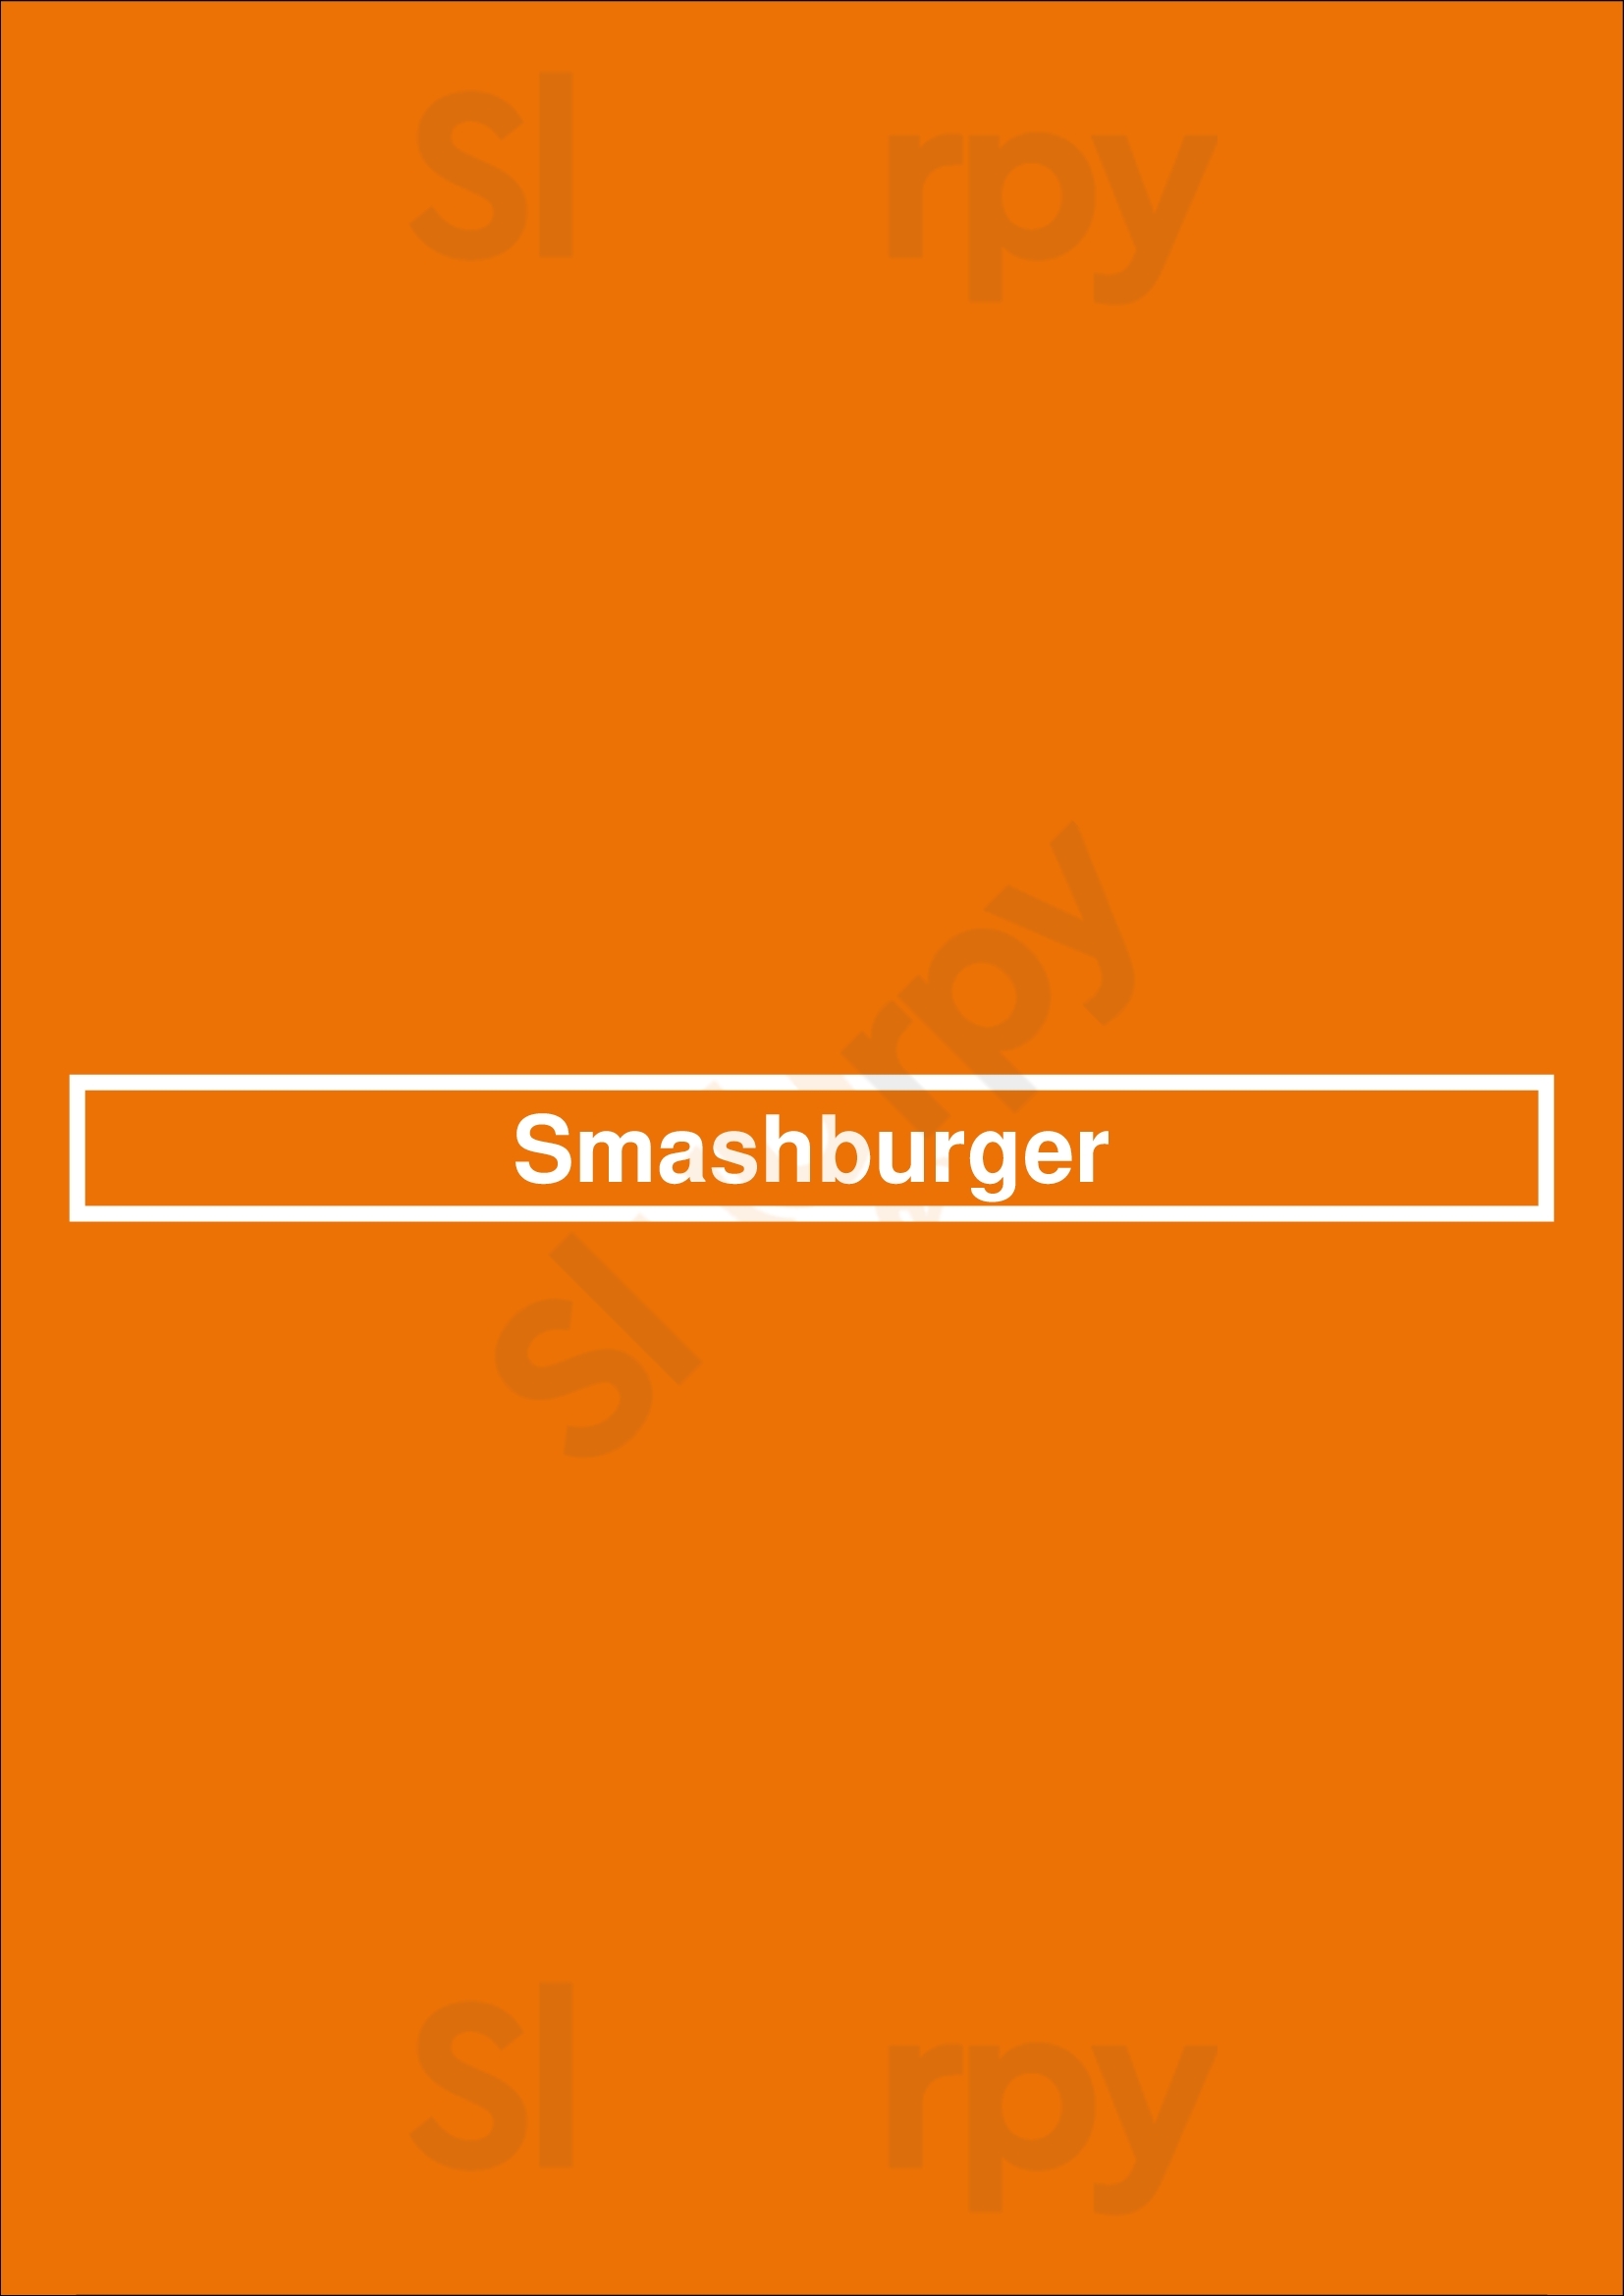 Smashburger Calgary Menu - 1